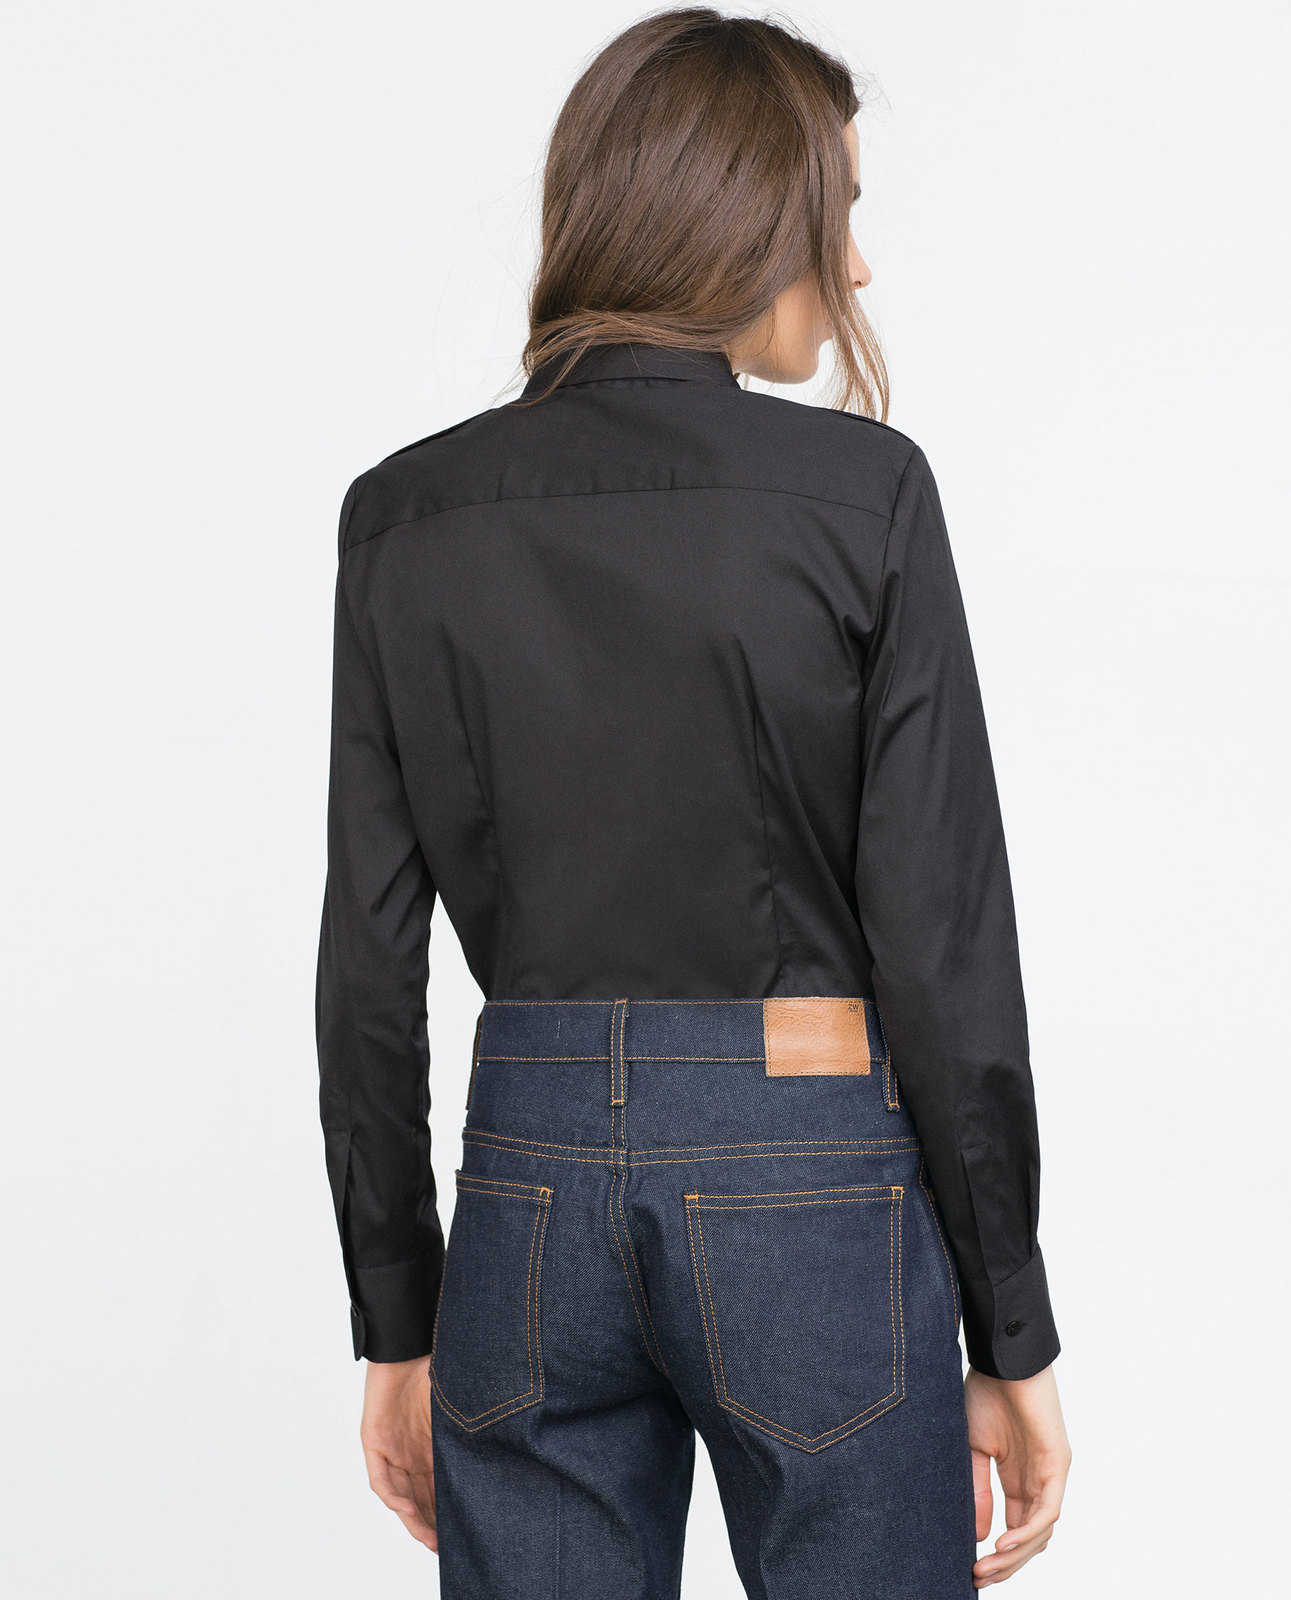 Zara női fekete puplin ing 2015.10.15 fotója